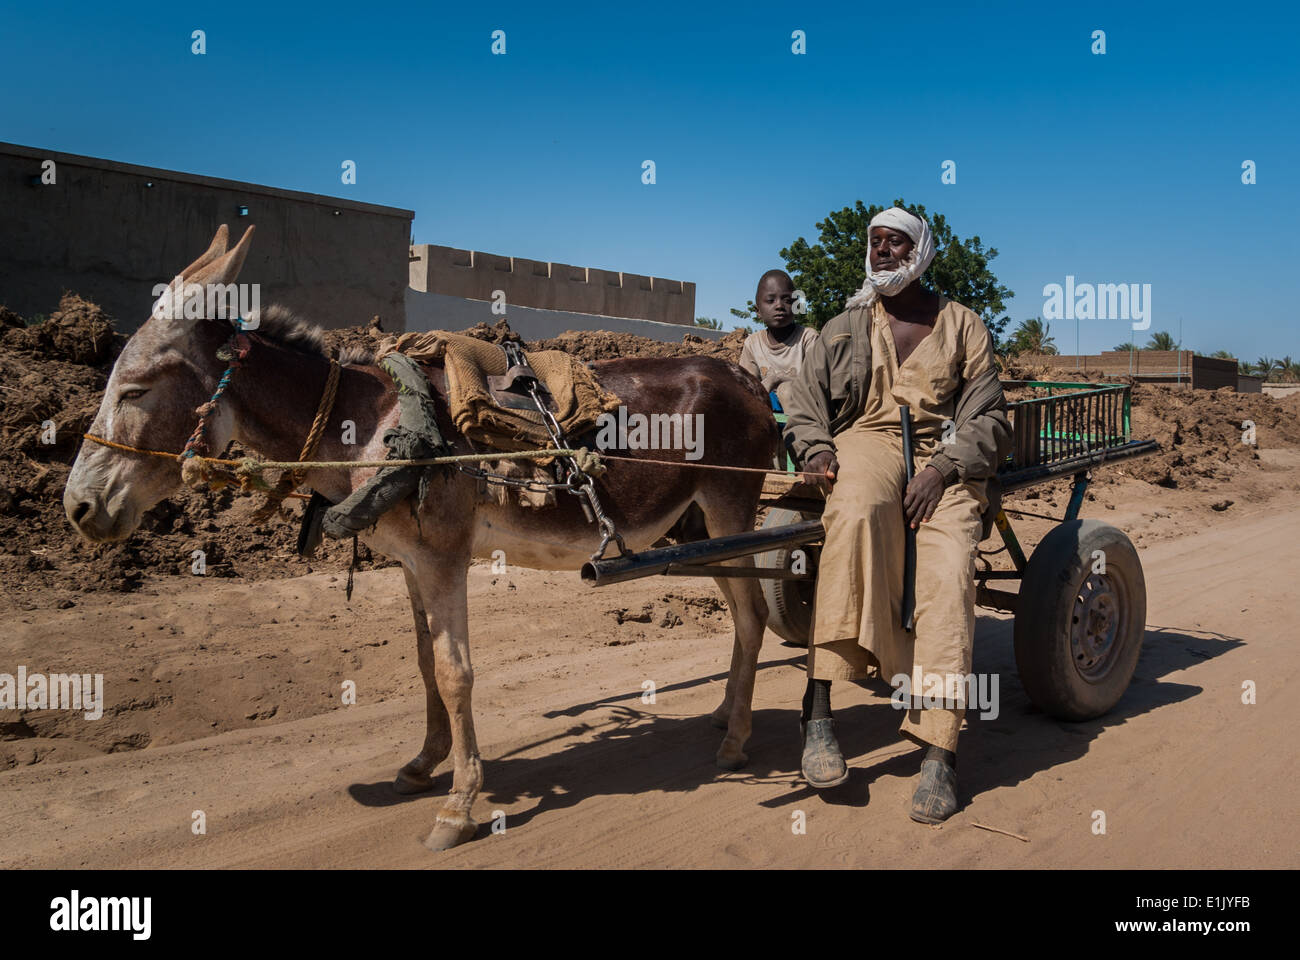 Mann mit Sohn auf den Esel Wagen, Kerma, Nord-Sudan Stockfoto